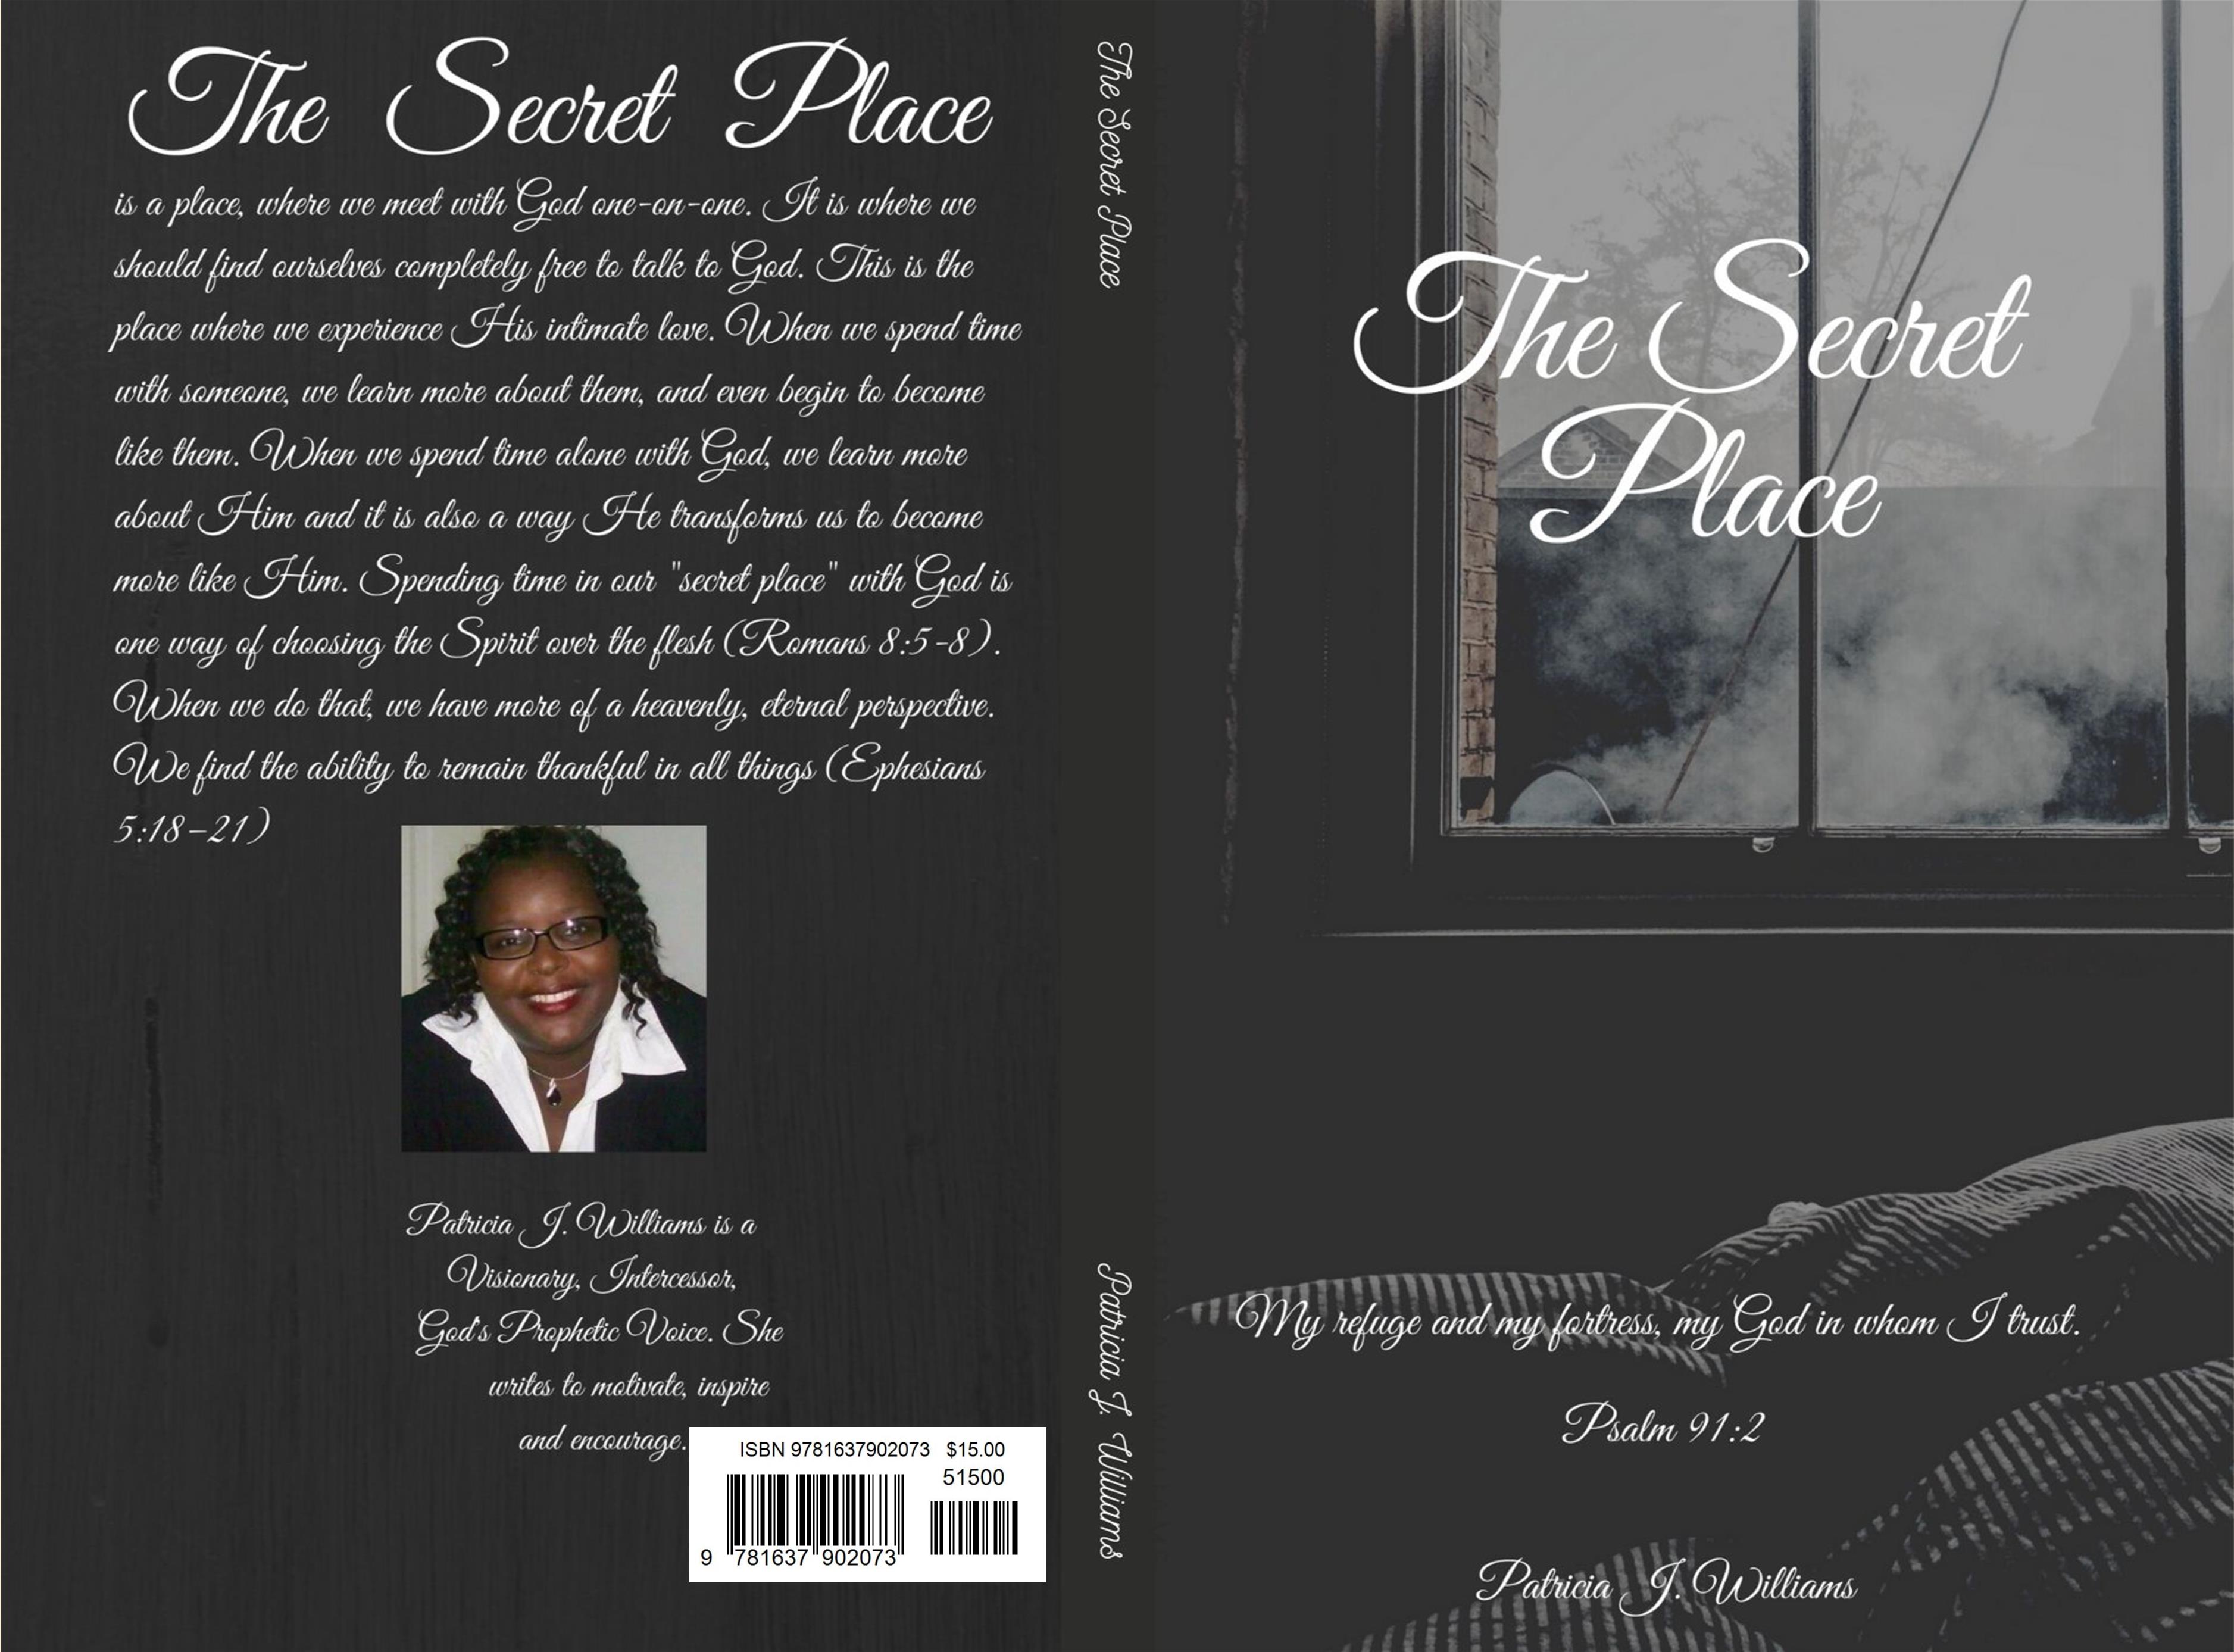 The Secret Place cover image